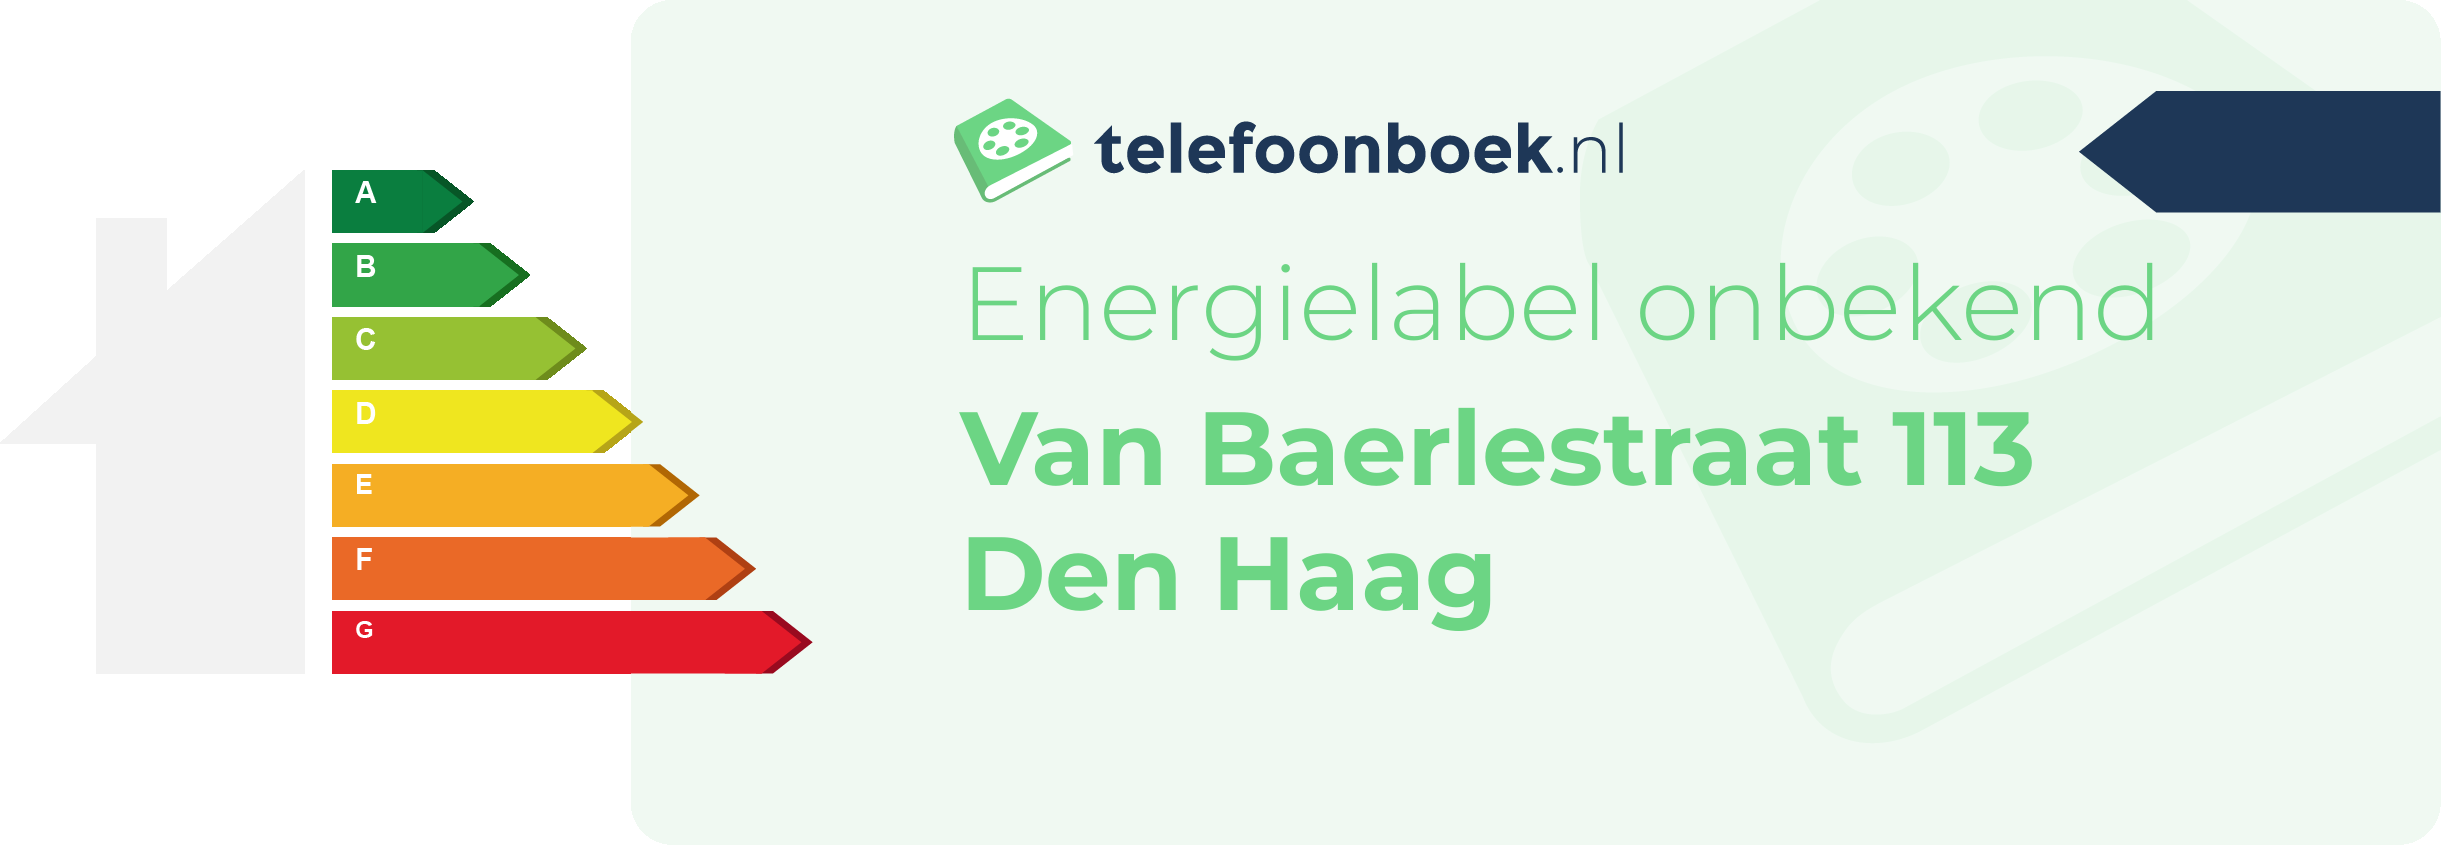 Energielabel Van Baerlestraat 113 Den Haag